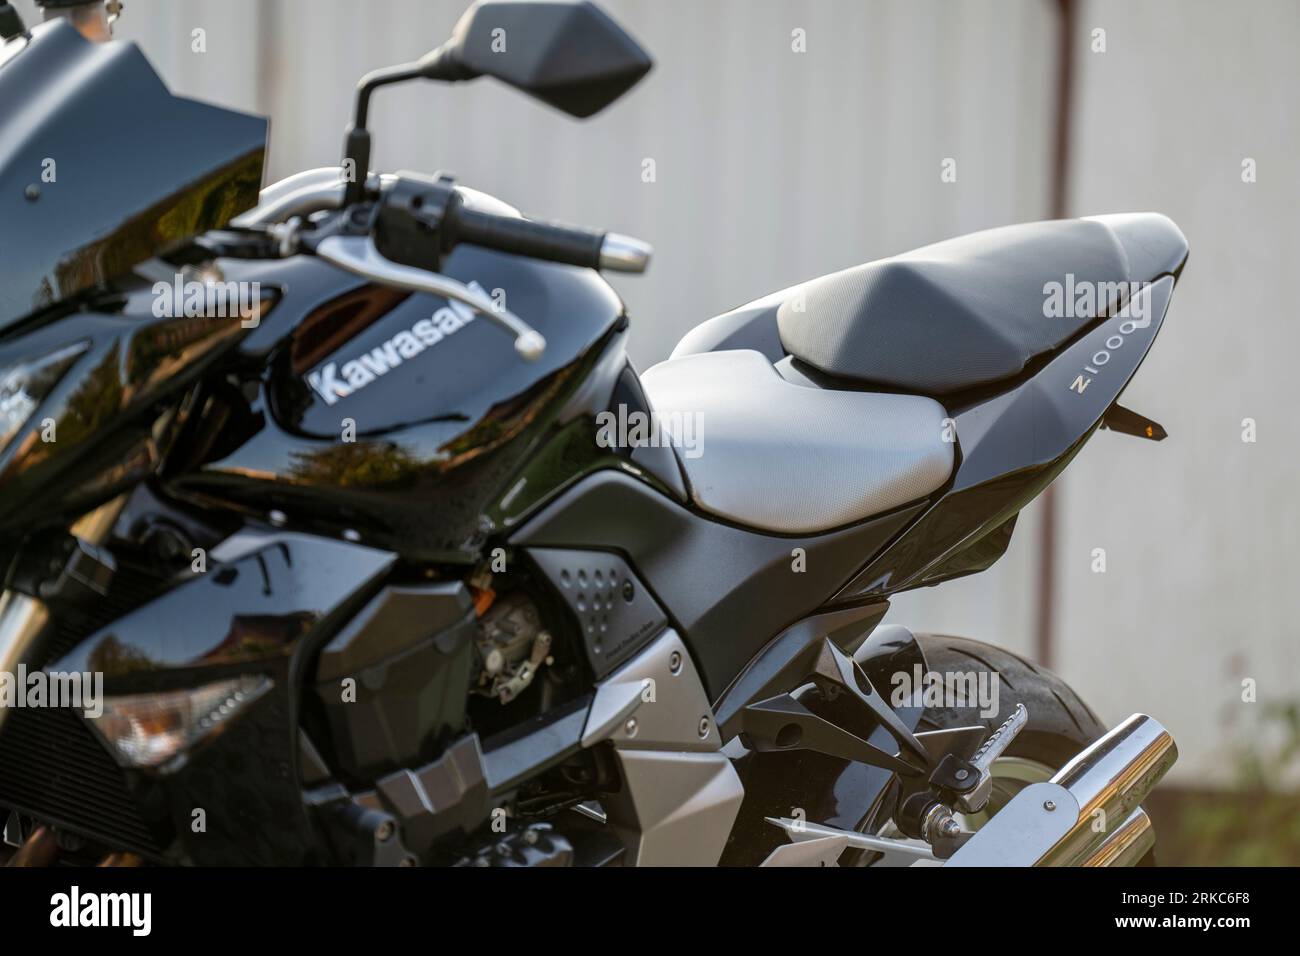 A Kawasaki Z1000 motorcycle, close up selective focus. Stock Photo